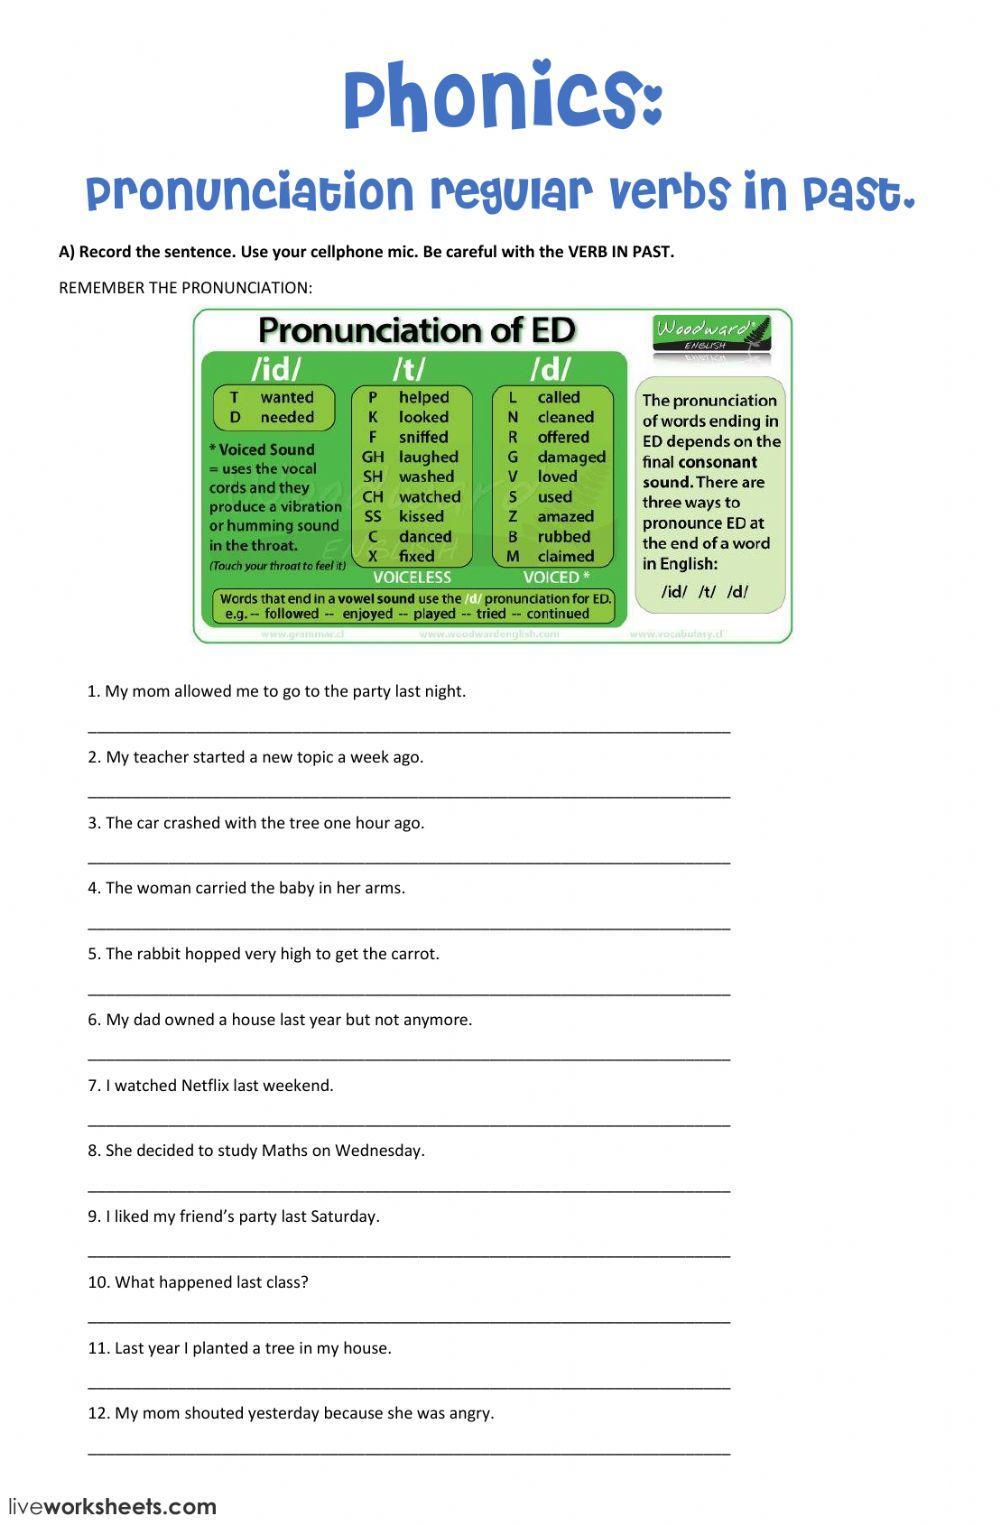 Pronunciation ed endings - phonics